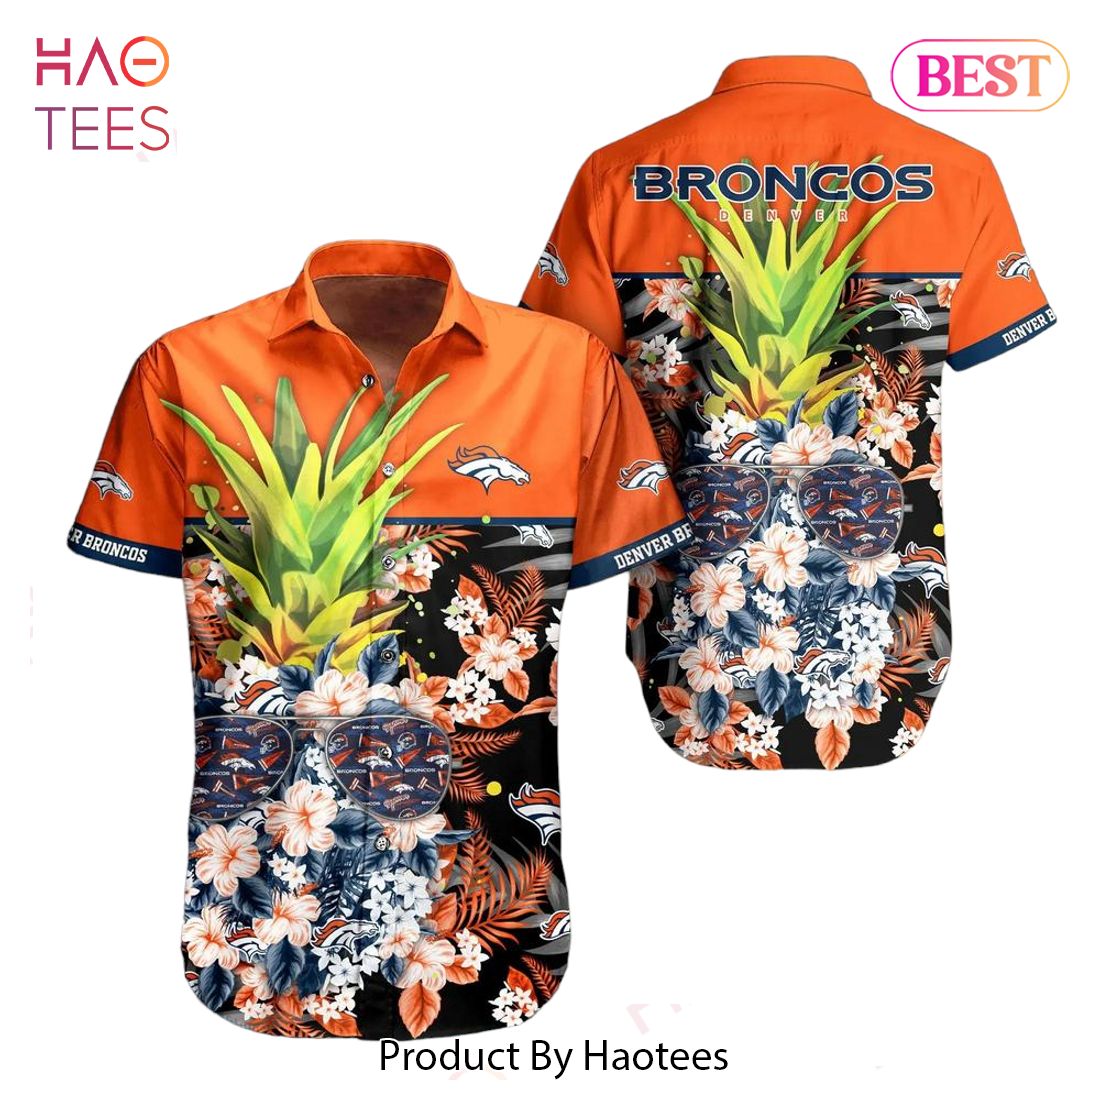 HOT TREND Denver Broncos NFL Tropical Pattern Pineapple Design Hawaiian Shirt New Trending For Men Women